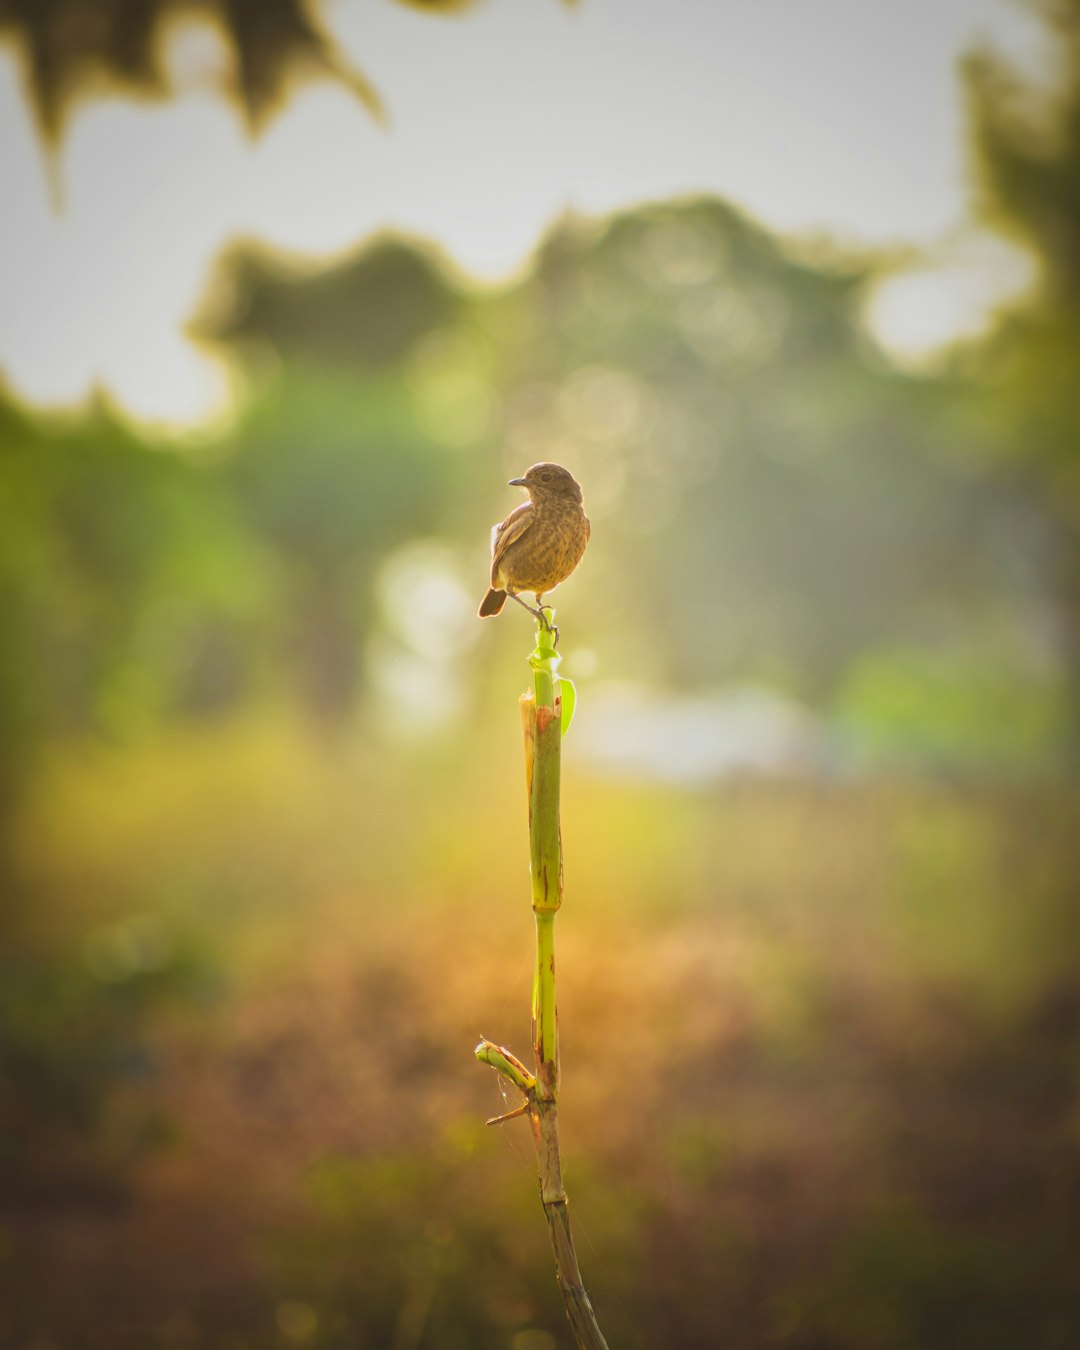 brown bird on green plant stem